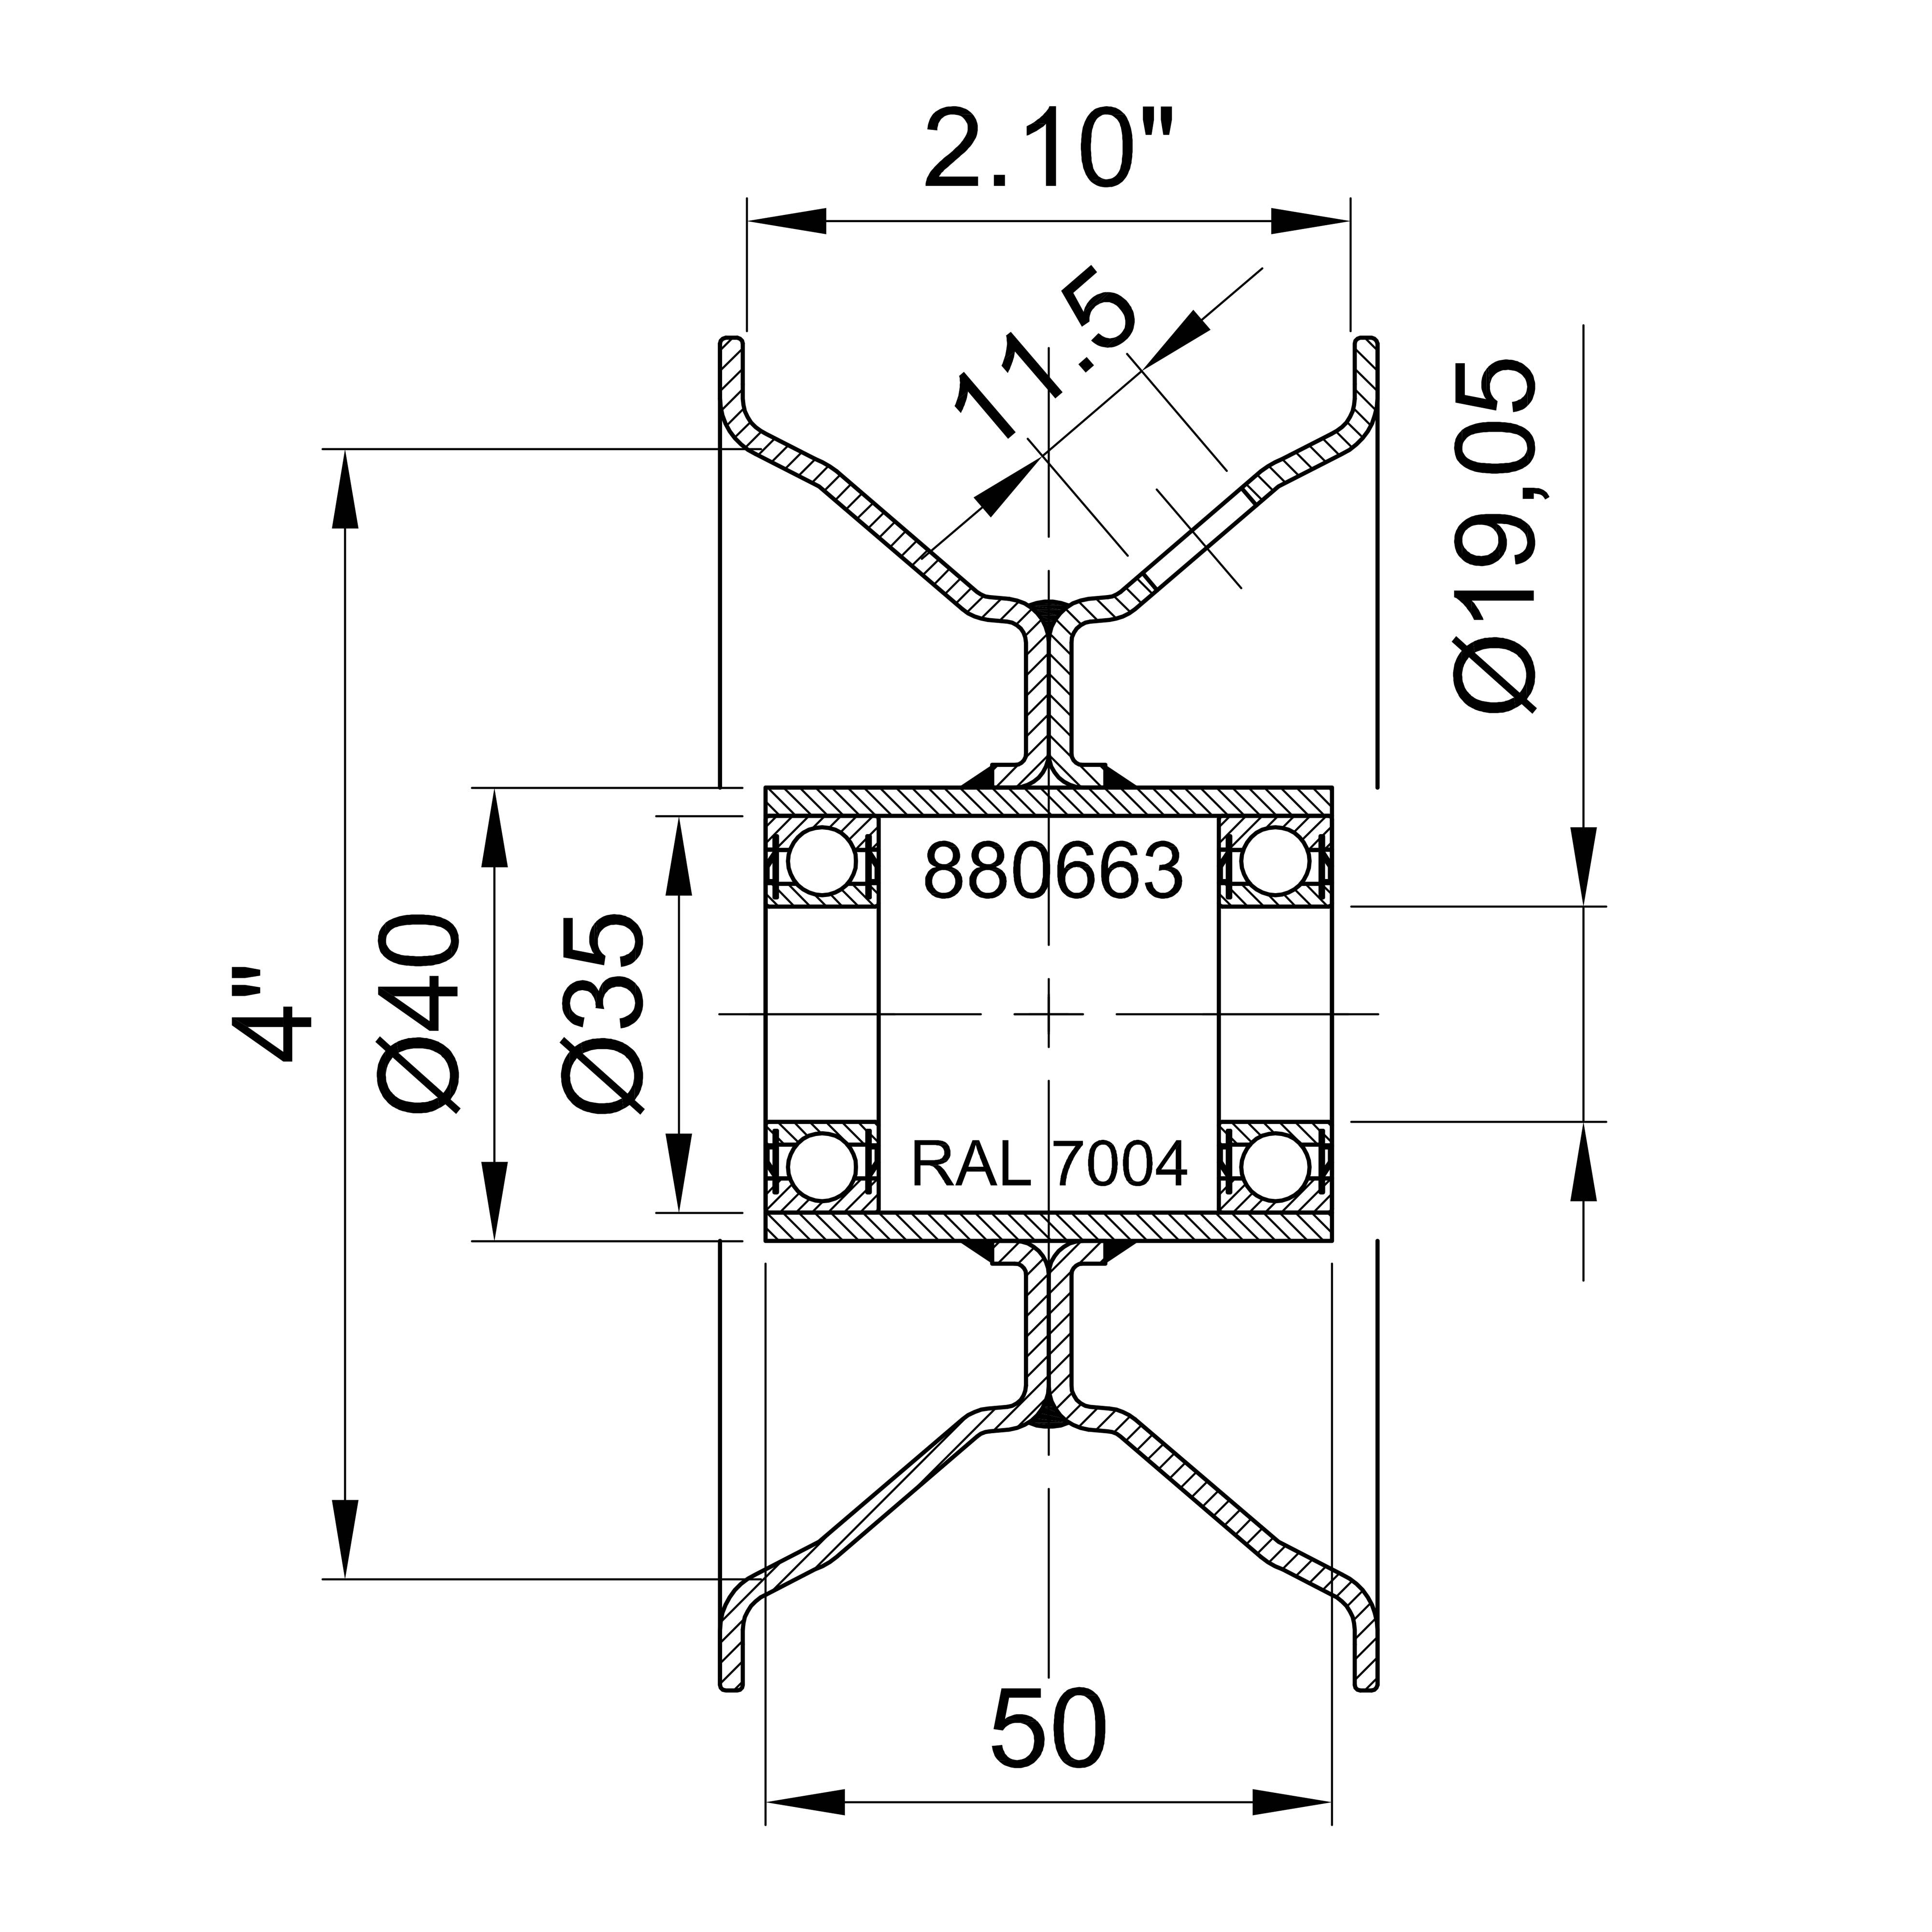 Felgenskizze zu Rad für Rasentraktor 11x4.00-4, 4PR, TT, Kenda K358, Nabe: 19.05x50mm